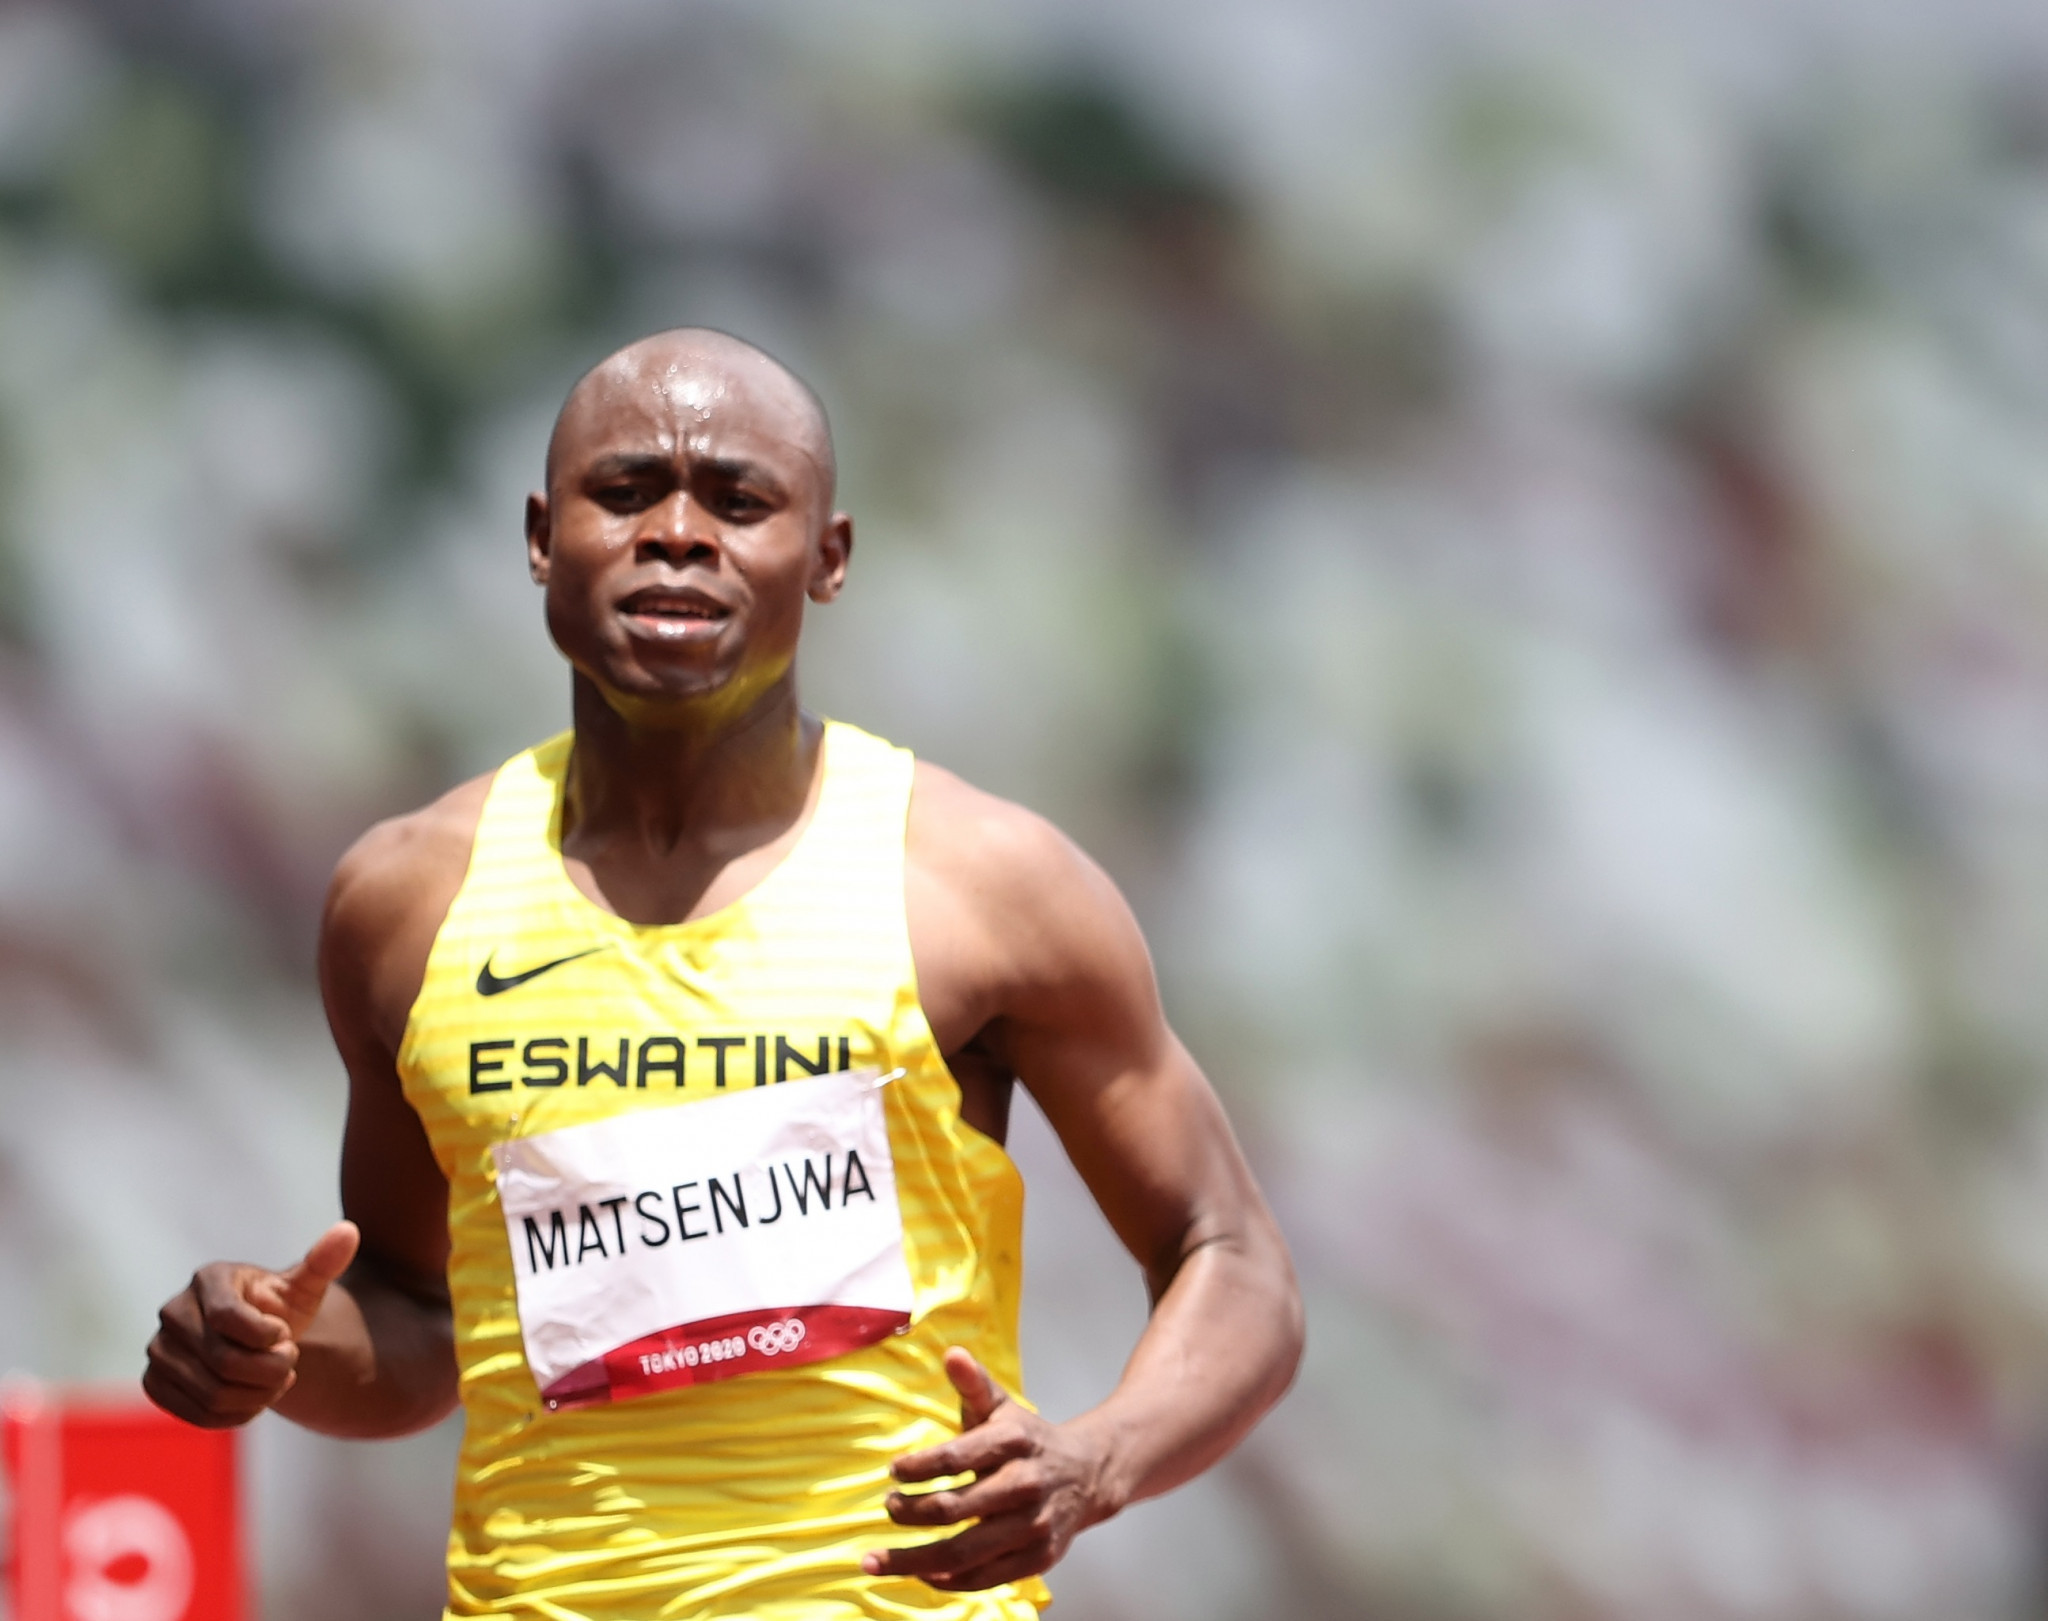 Tokyo 2020 semi-finalist Sibusiso Matsenjwa will be a big Birmingham hope in the 200 metres ©Getty Images